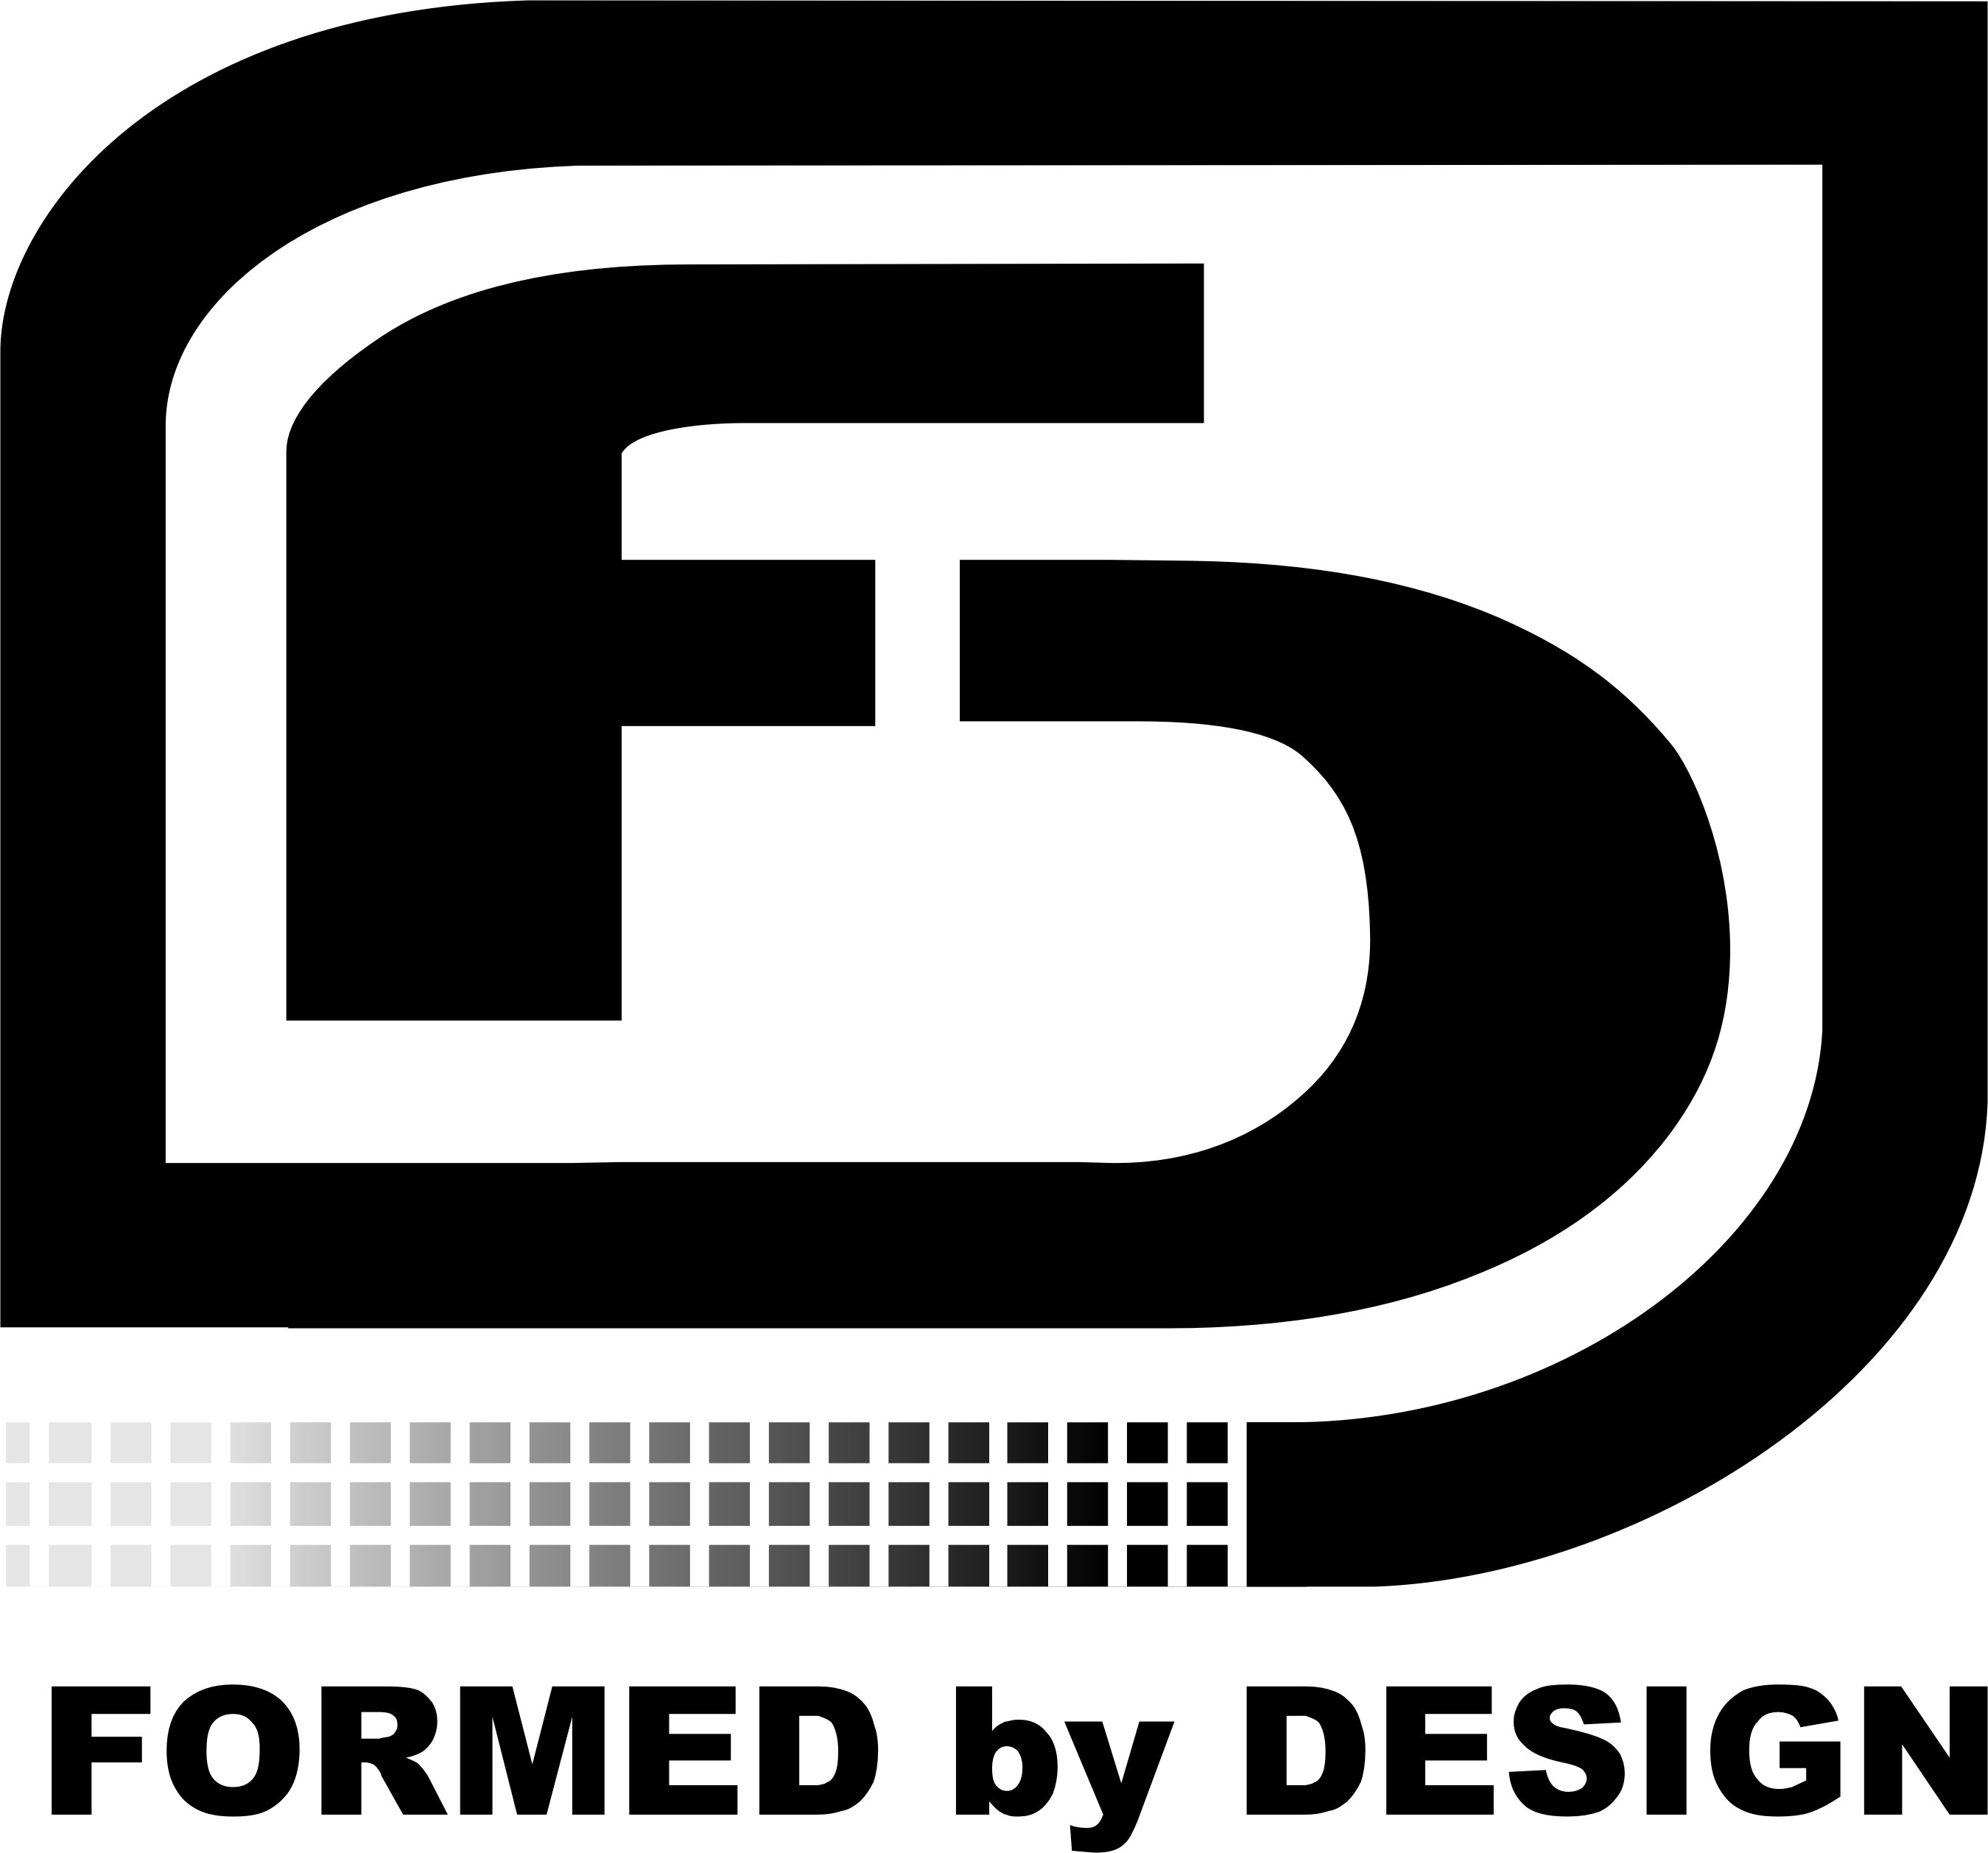 Formed by Design, LLC